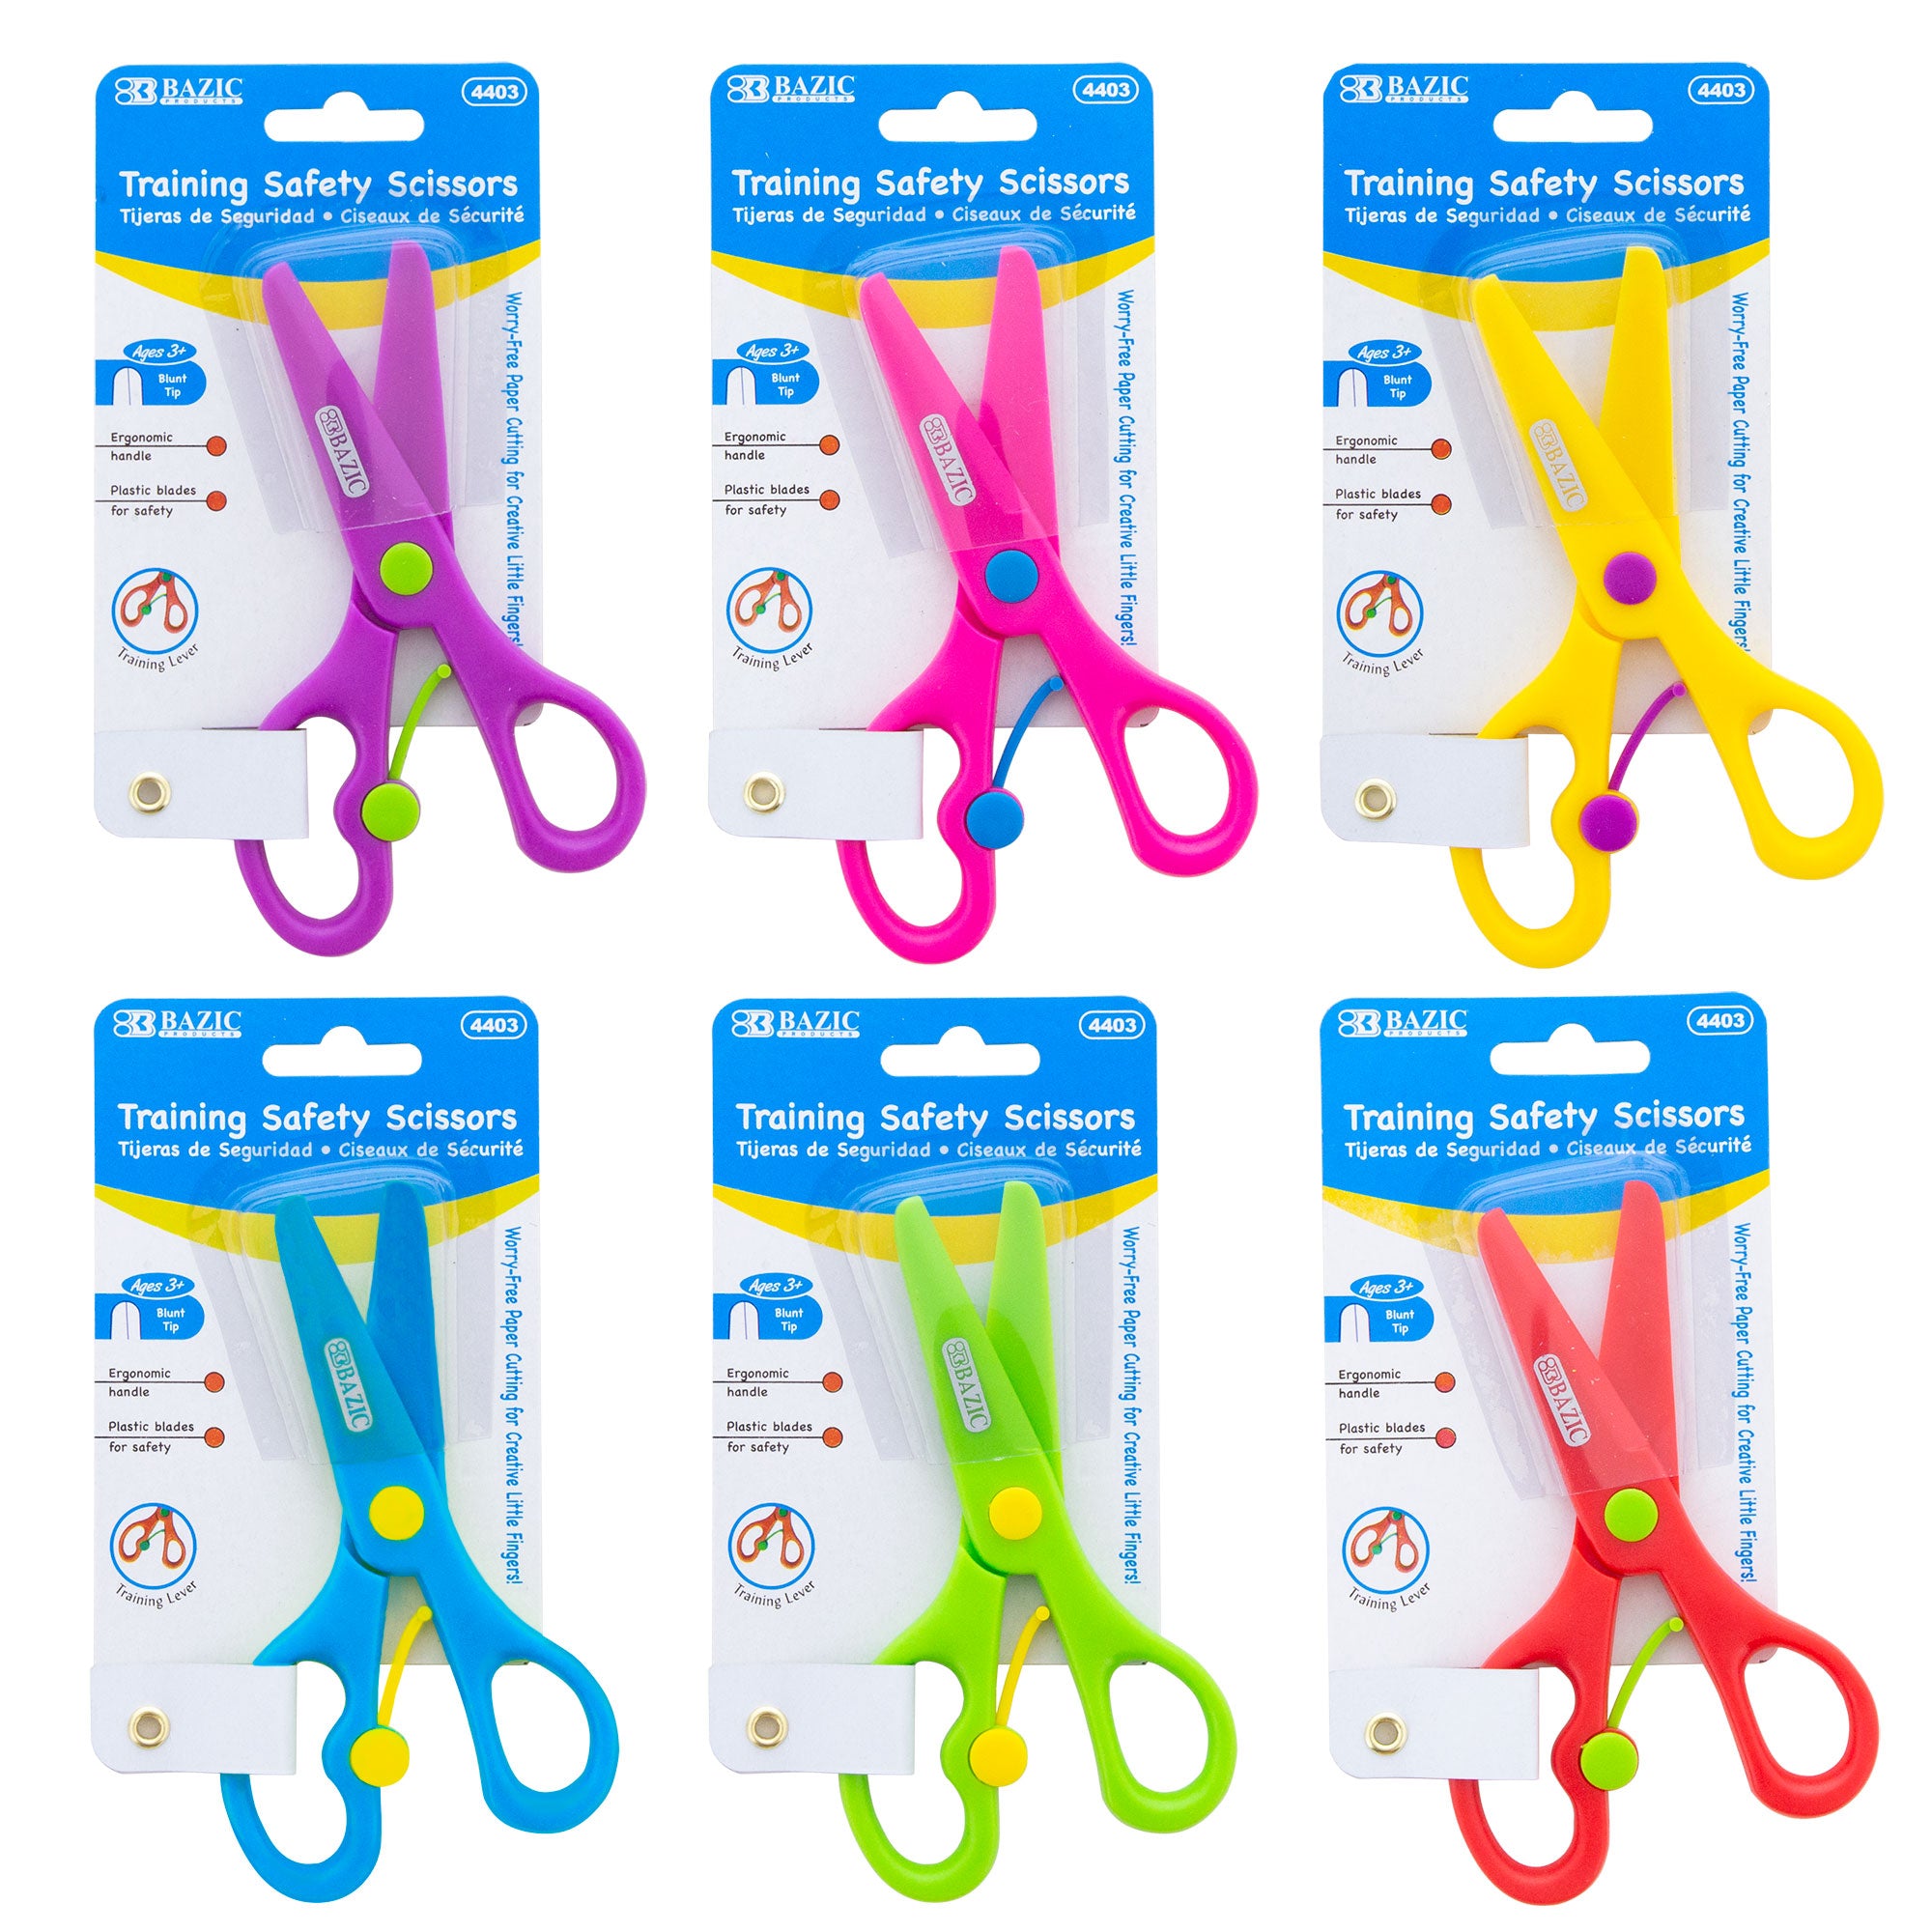 Stanley Minnow™ 5 Kids Scissors, 2-Pack